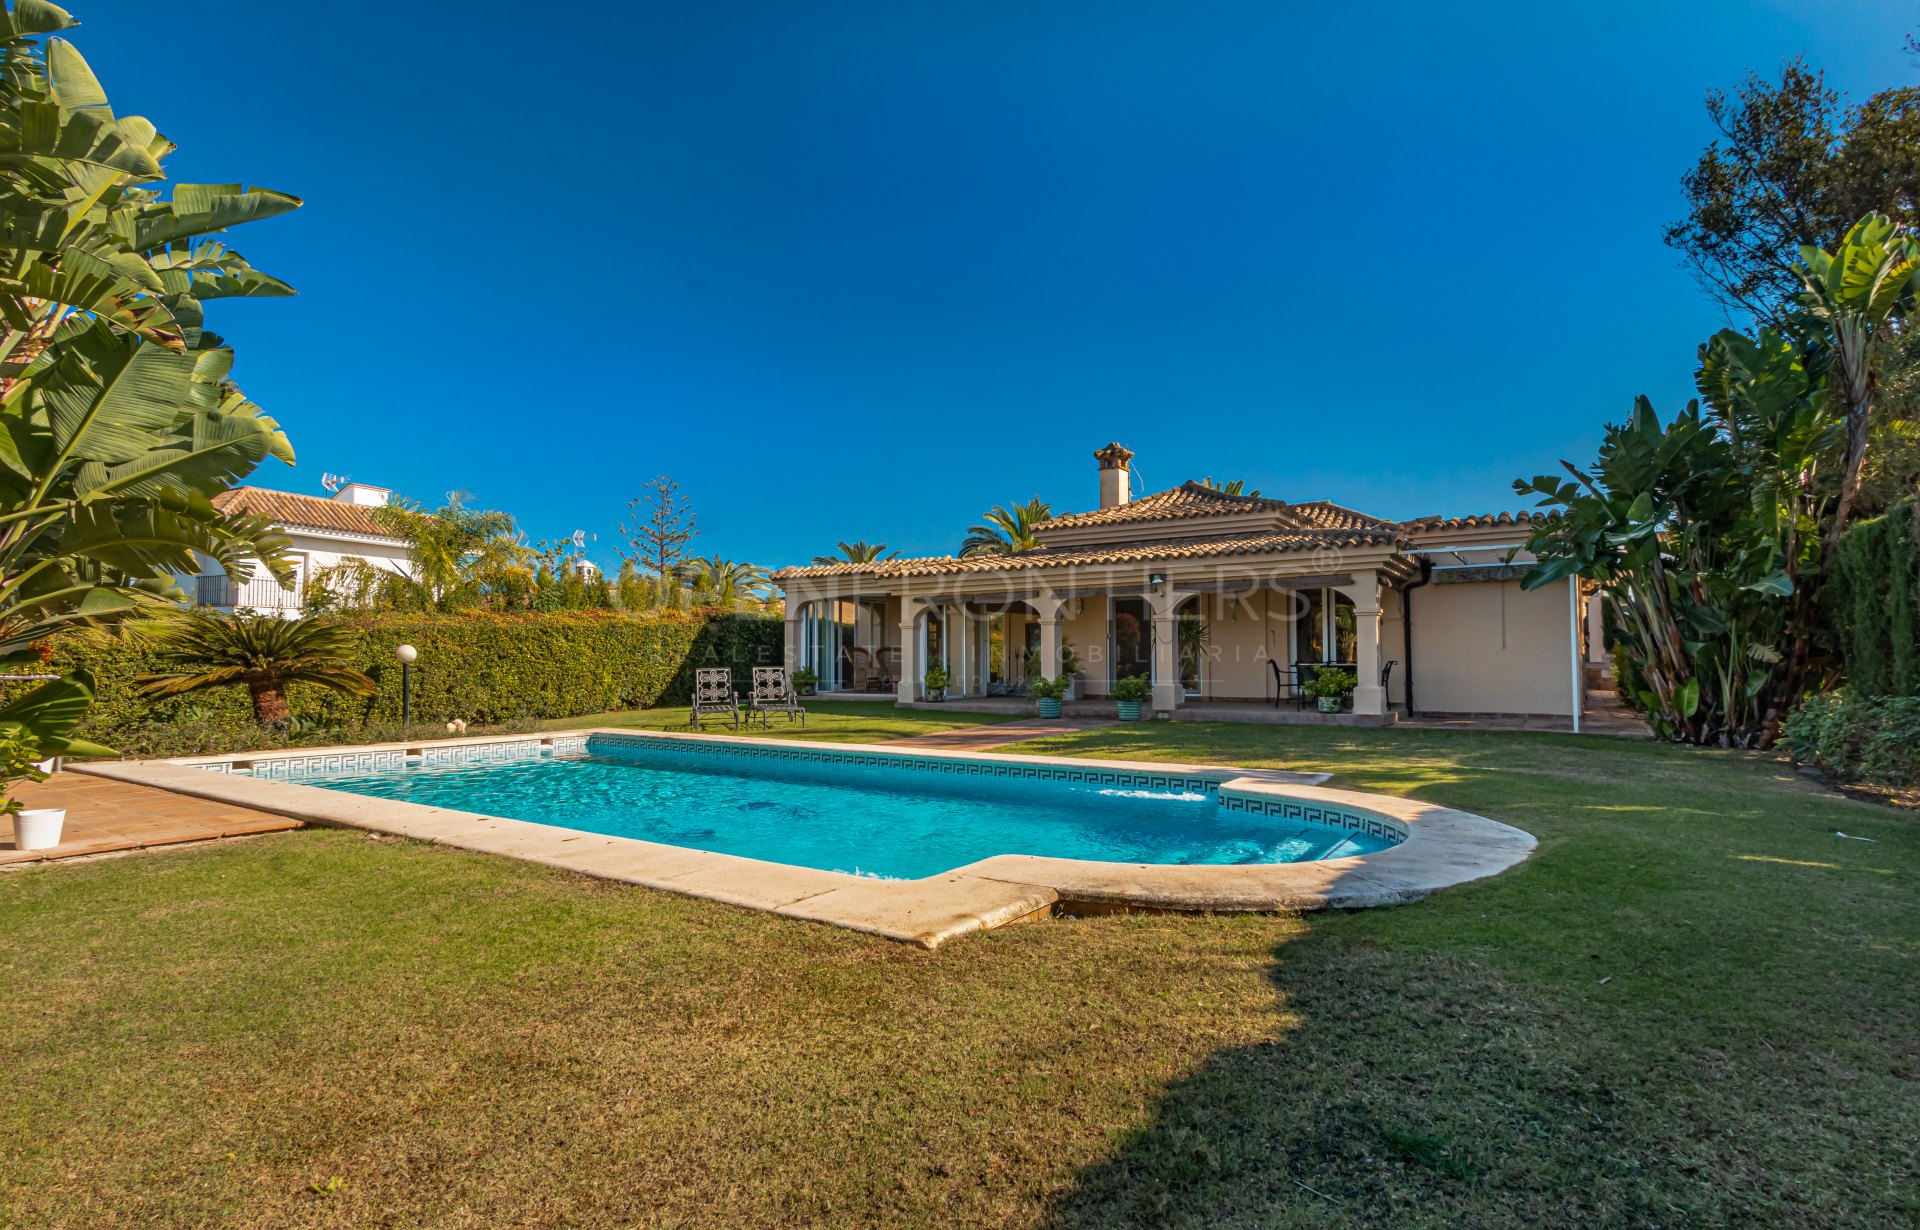 Exceptional Villa in a Serene Sotogrande Costa Location, Zone B's Most Tranquil Street